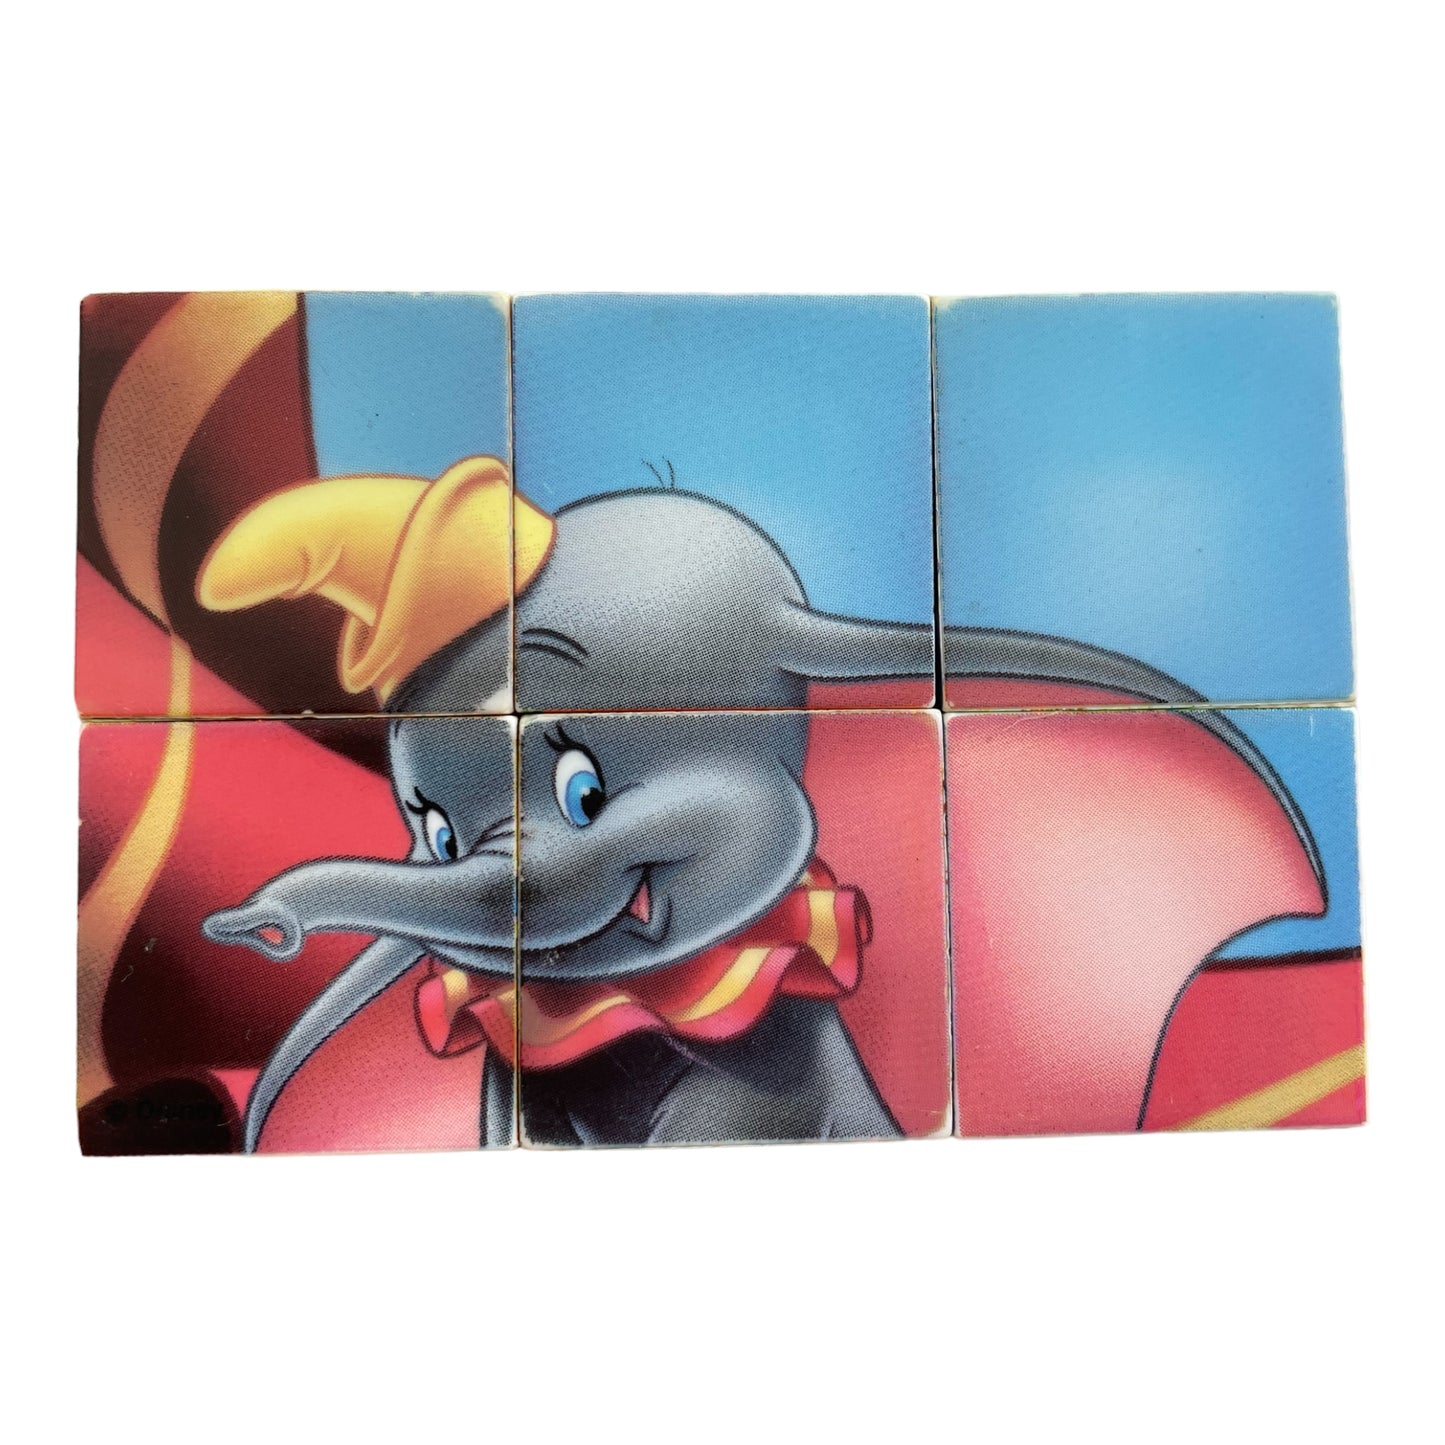 Ravensburger - Cubes - 6 Cubes - Disney Animal Friends (Bambi, Dumbo, 101 Damaltians, Lion king, and Jungle Book)